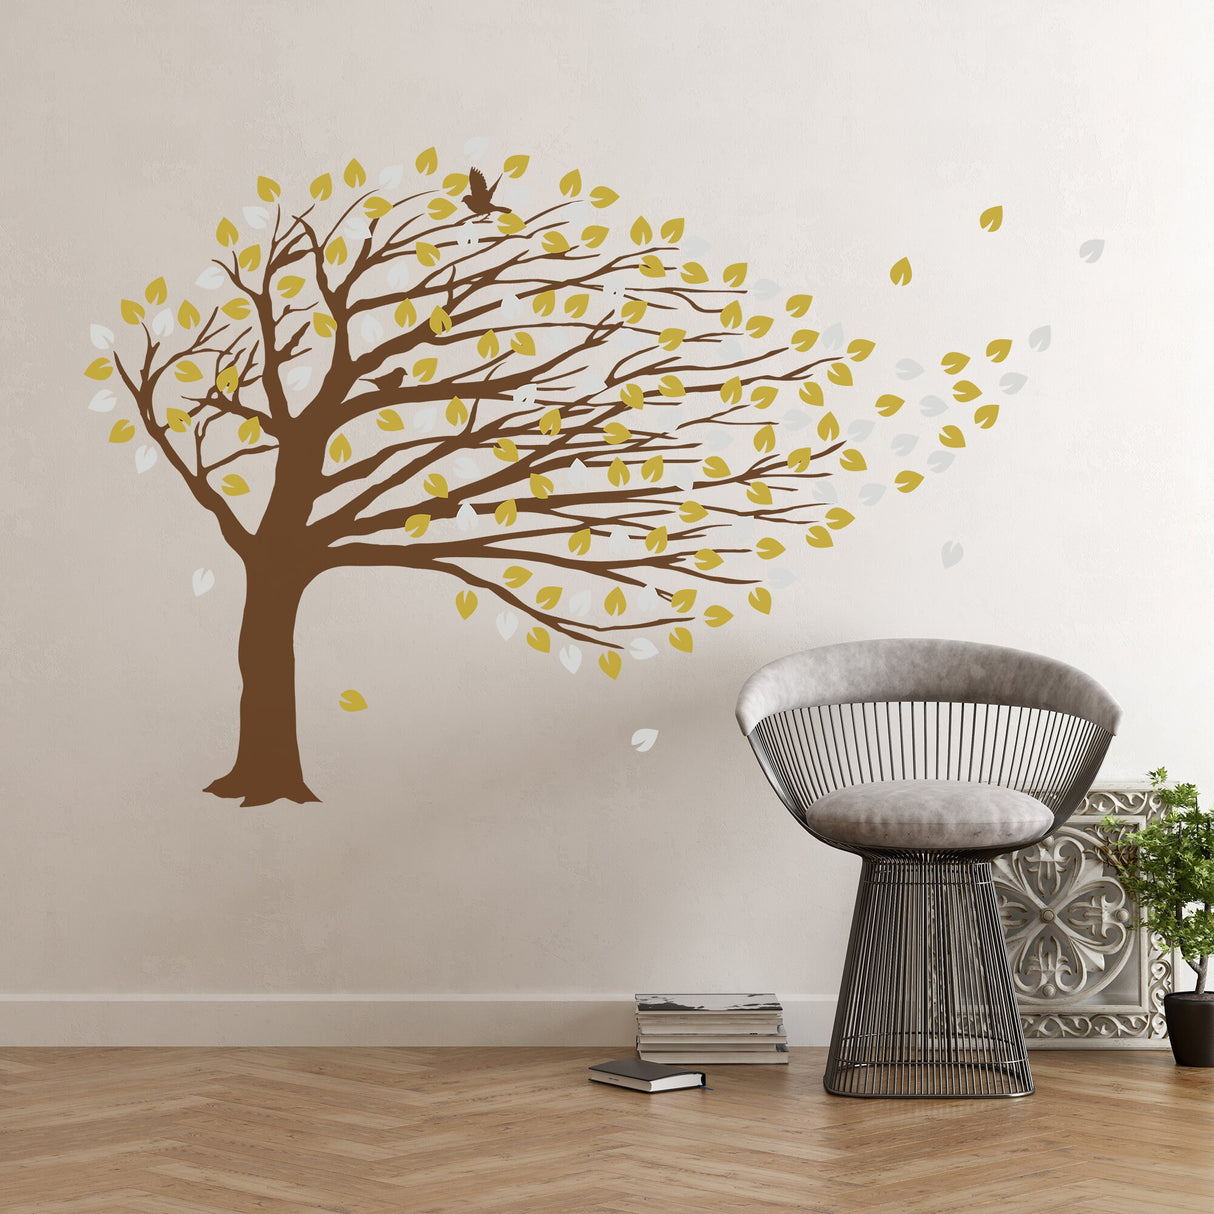 Windy Tree Wall Decal Vinyl Sticker - Nursery Art Decor Blossom Large Green Decals